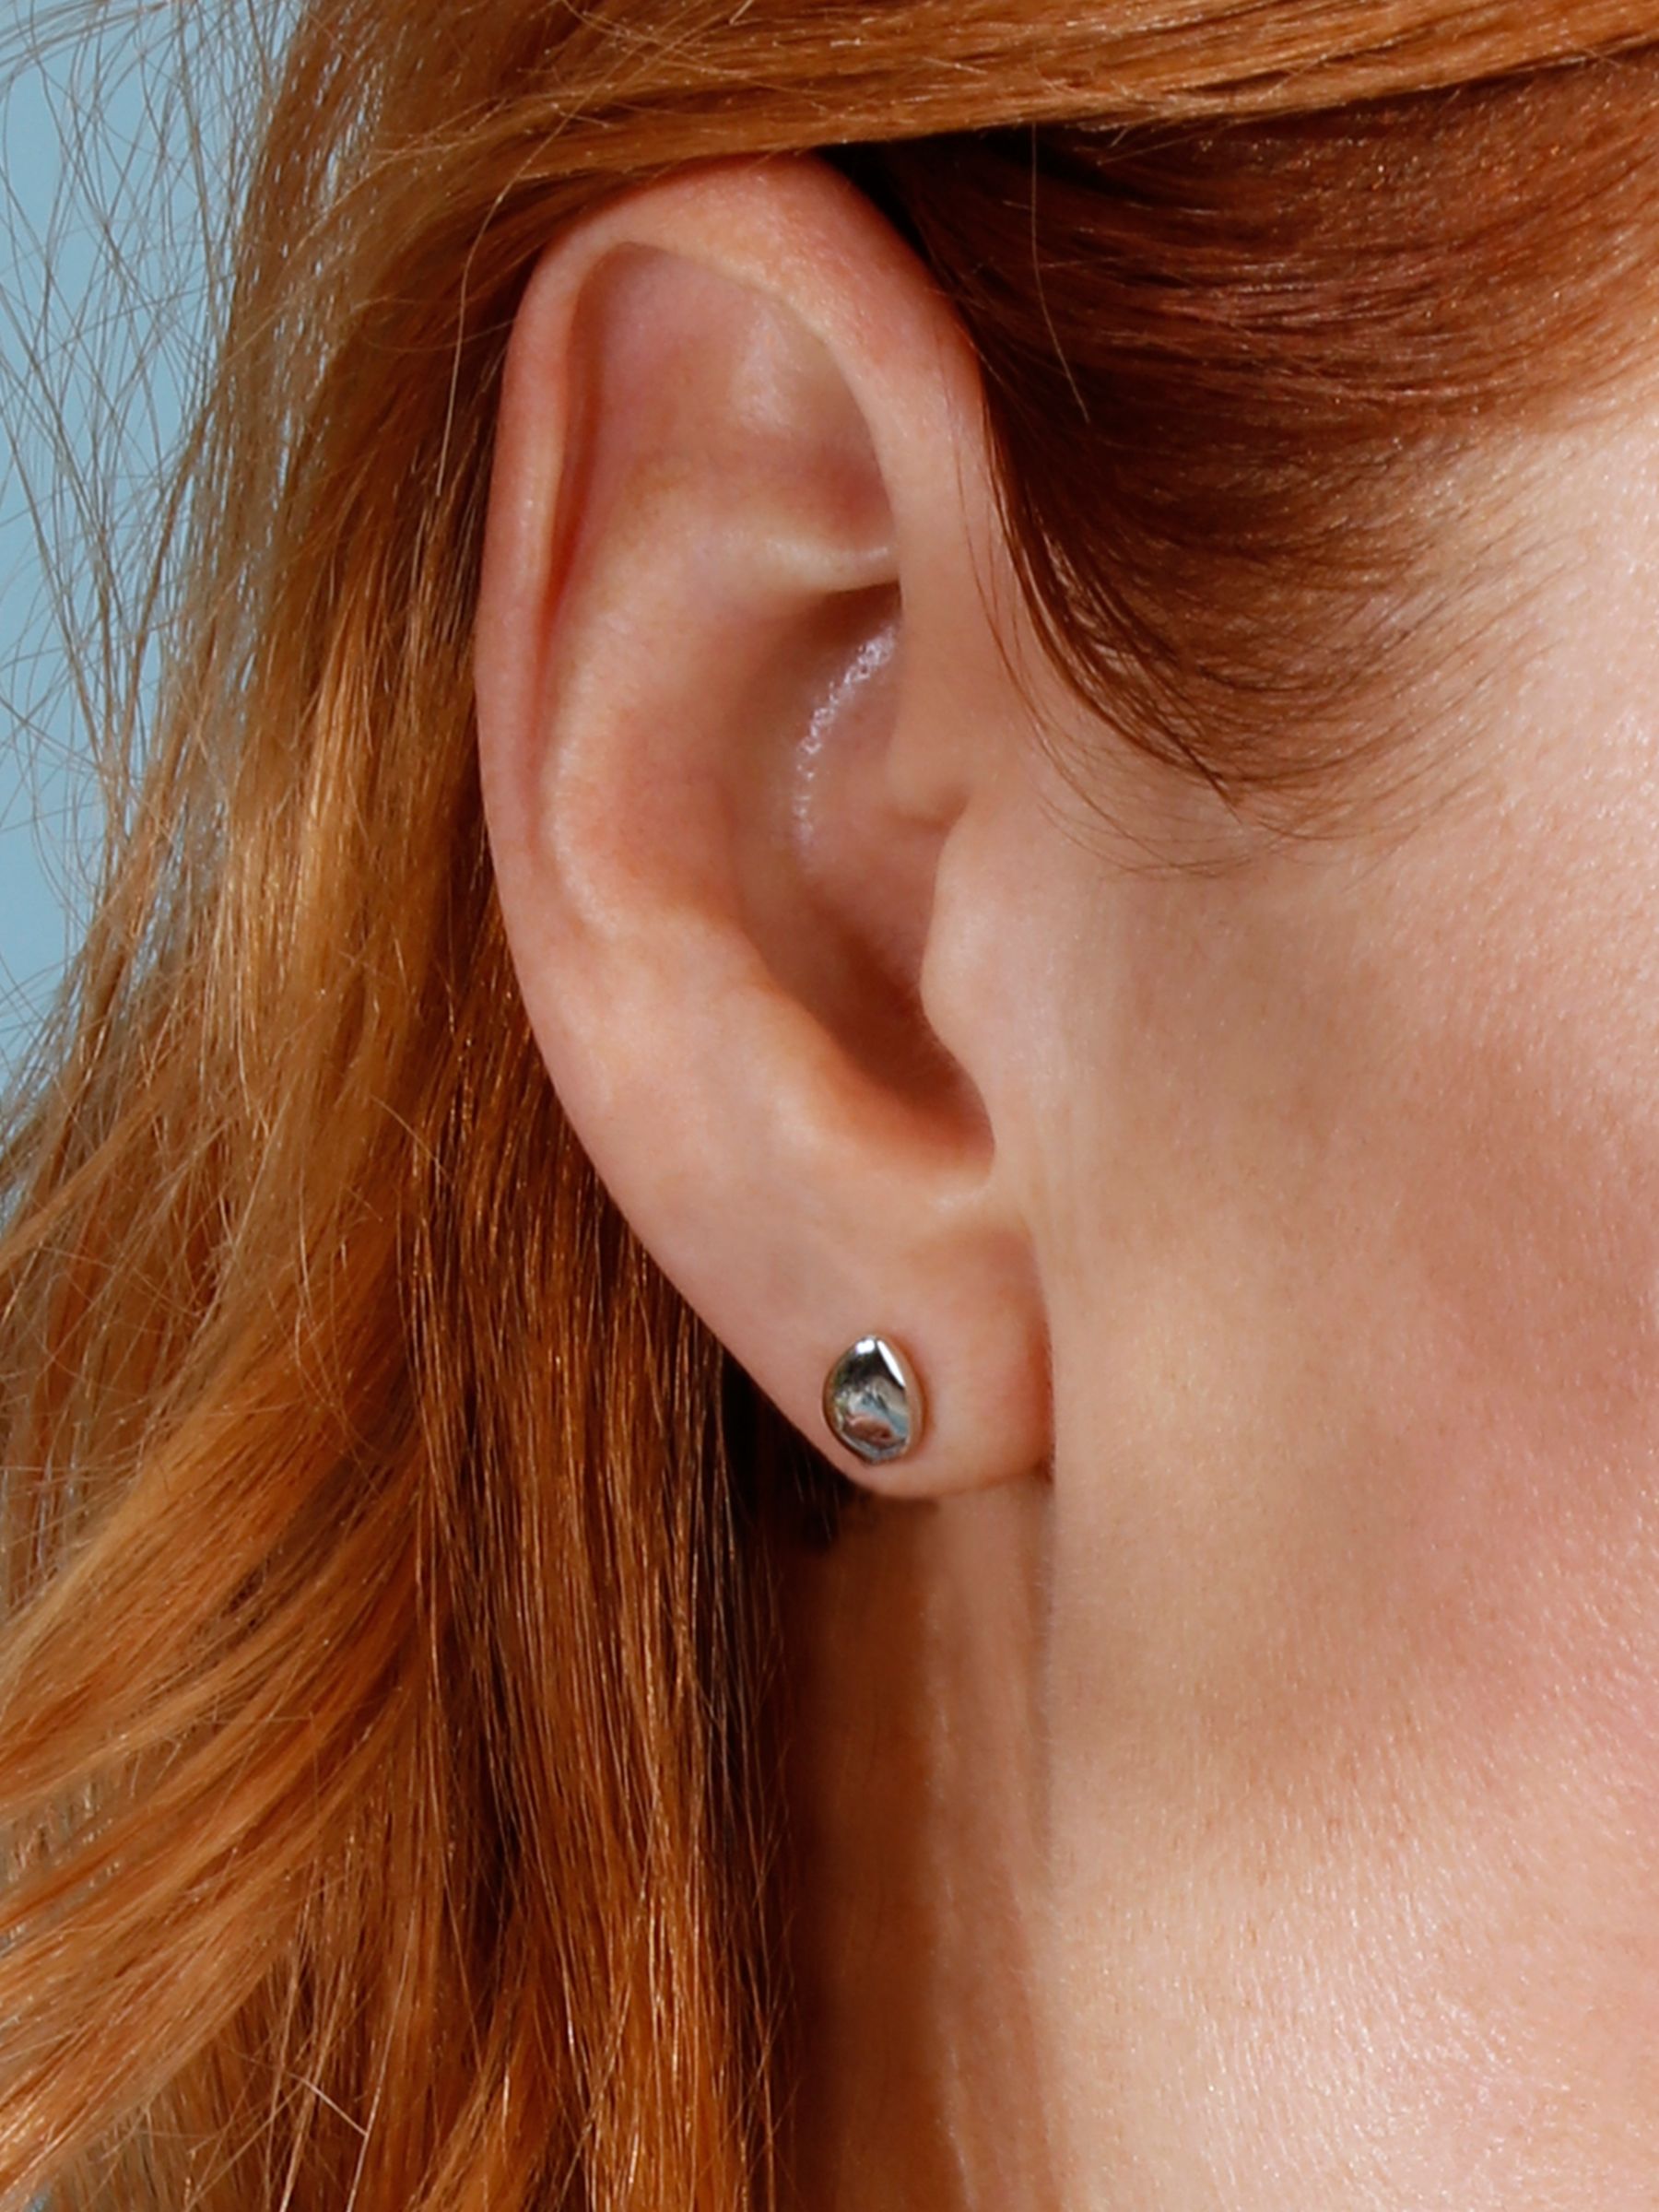 Buy Kit Heath Coast Pebbles Small Stud Earrings, Silver Online at johnlewis.com